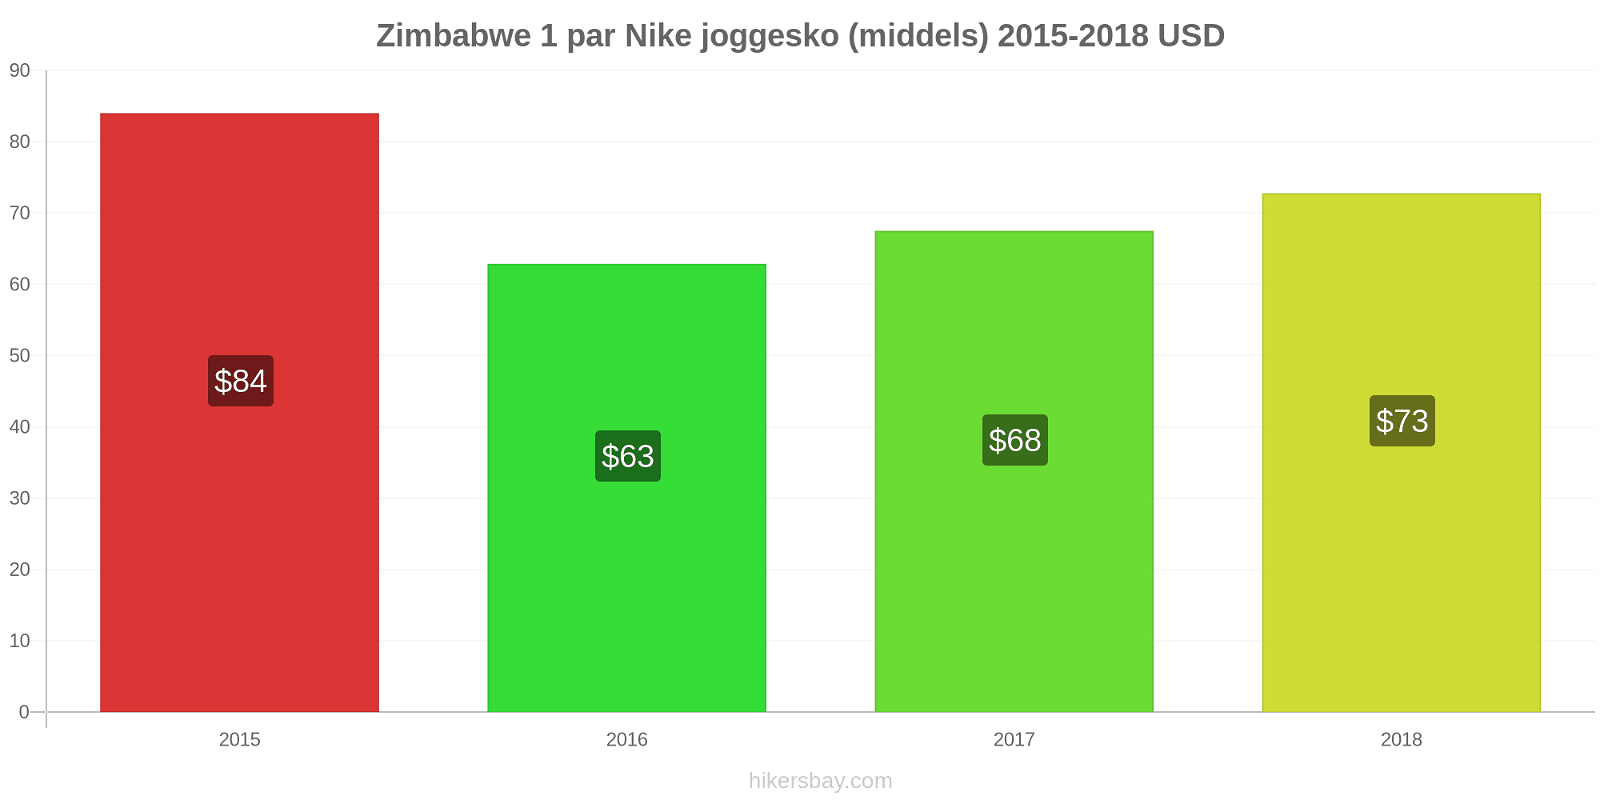 Zimbabwe prisendringer 1 par Nike joggesko (middels) hikersbay.com